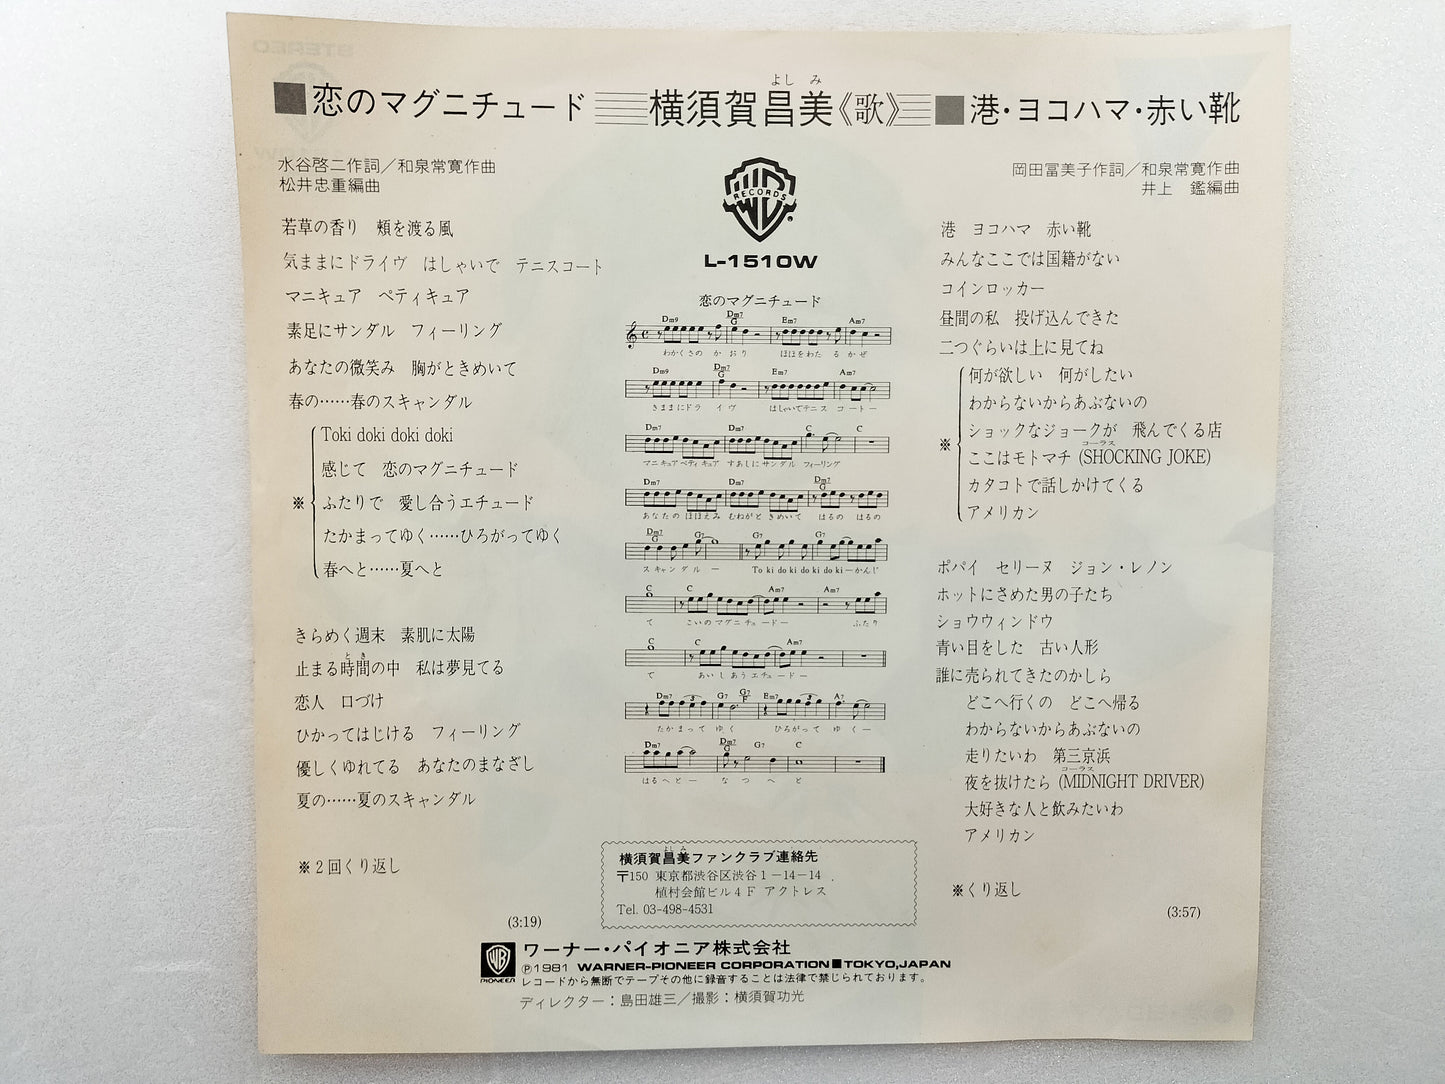 1981 Koi no Magnitude Masami Yokosuka B: Minato, Yokohama, Red Shoes Japanese record vintage